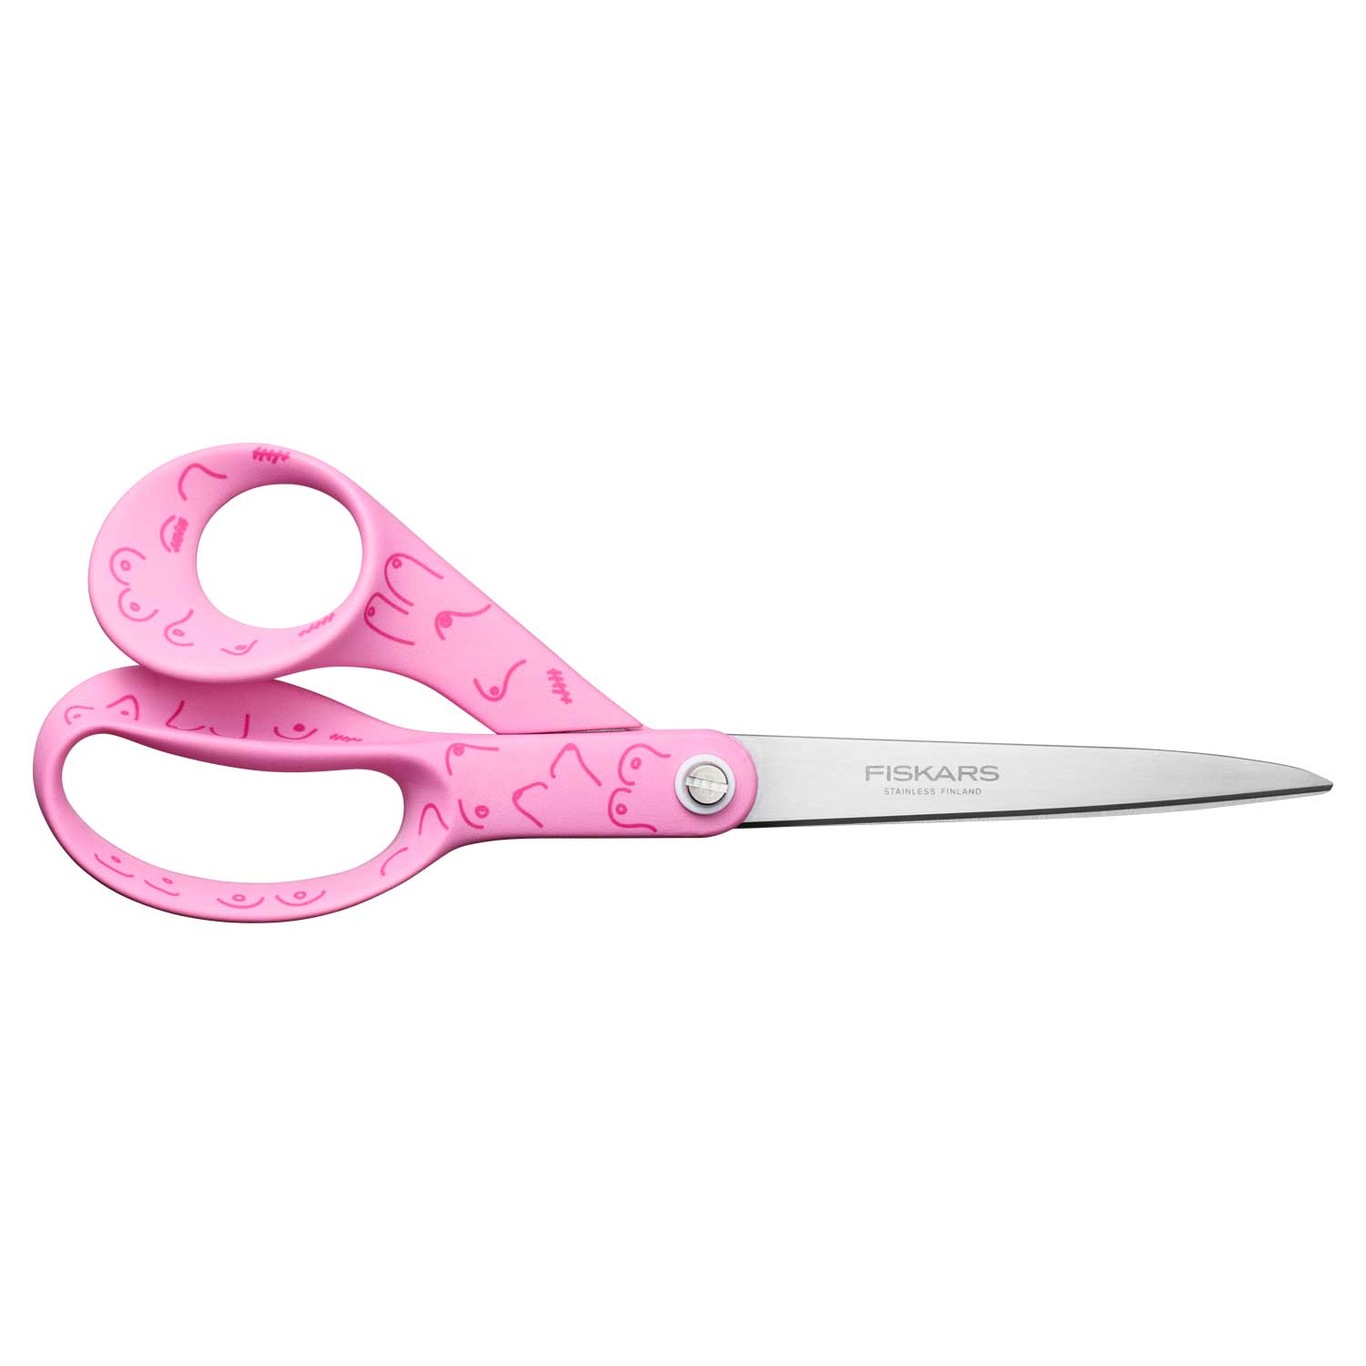 Universal Scissor 21 cm, Pink Ribbon